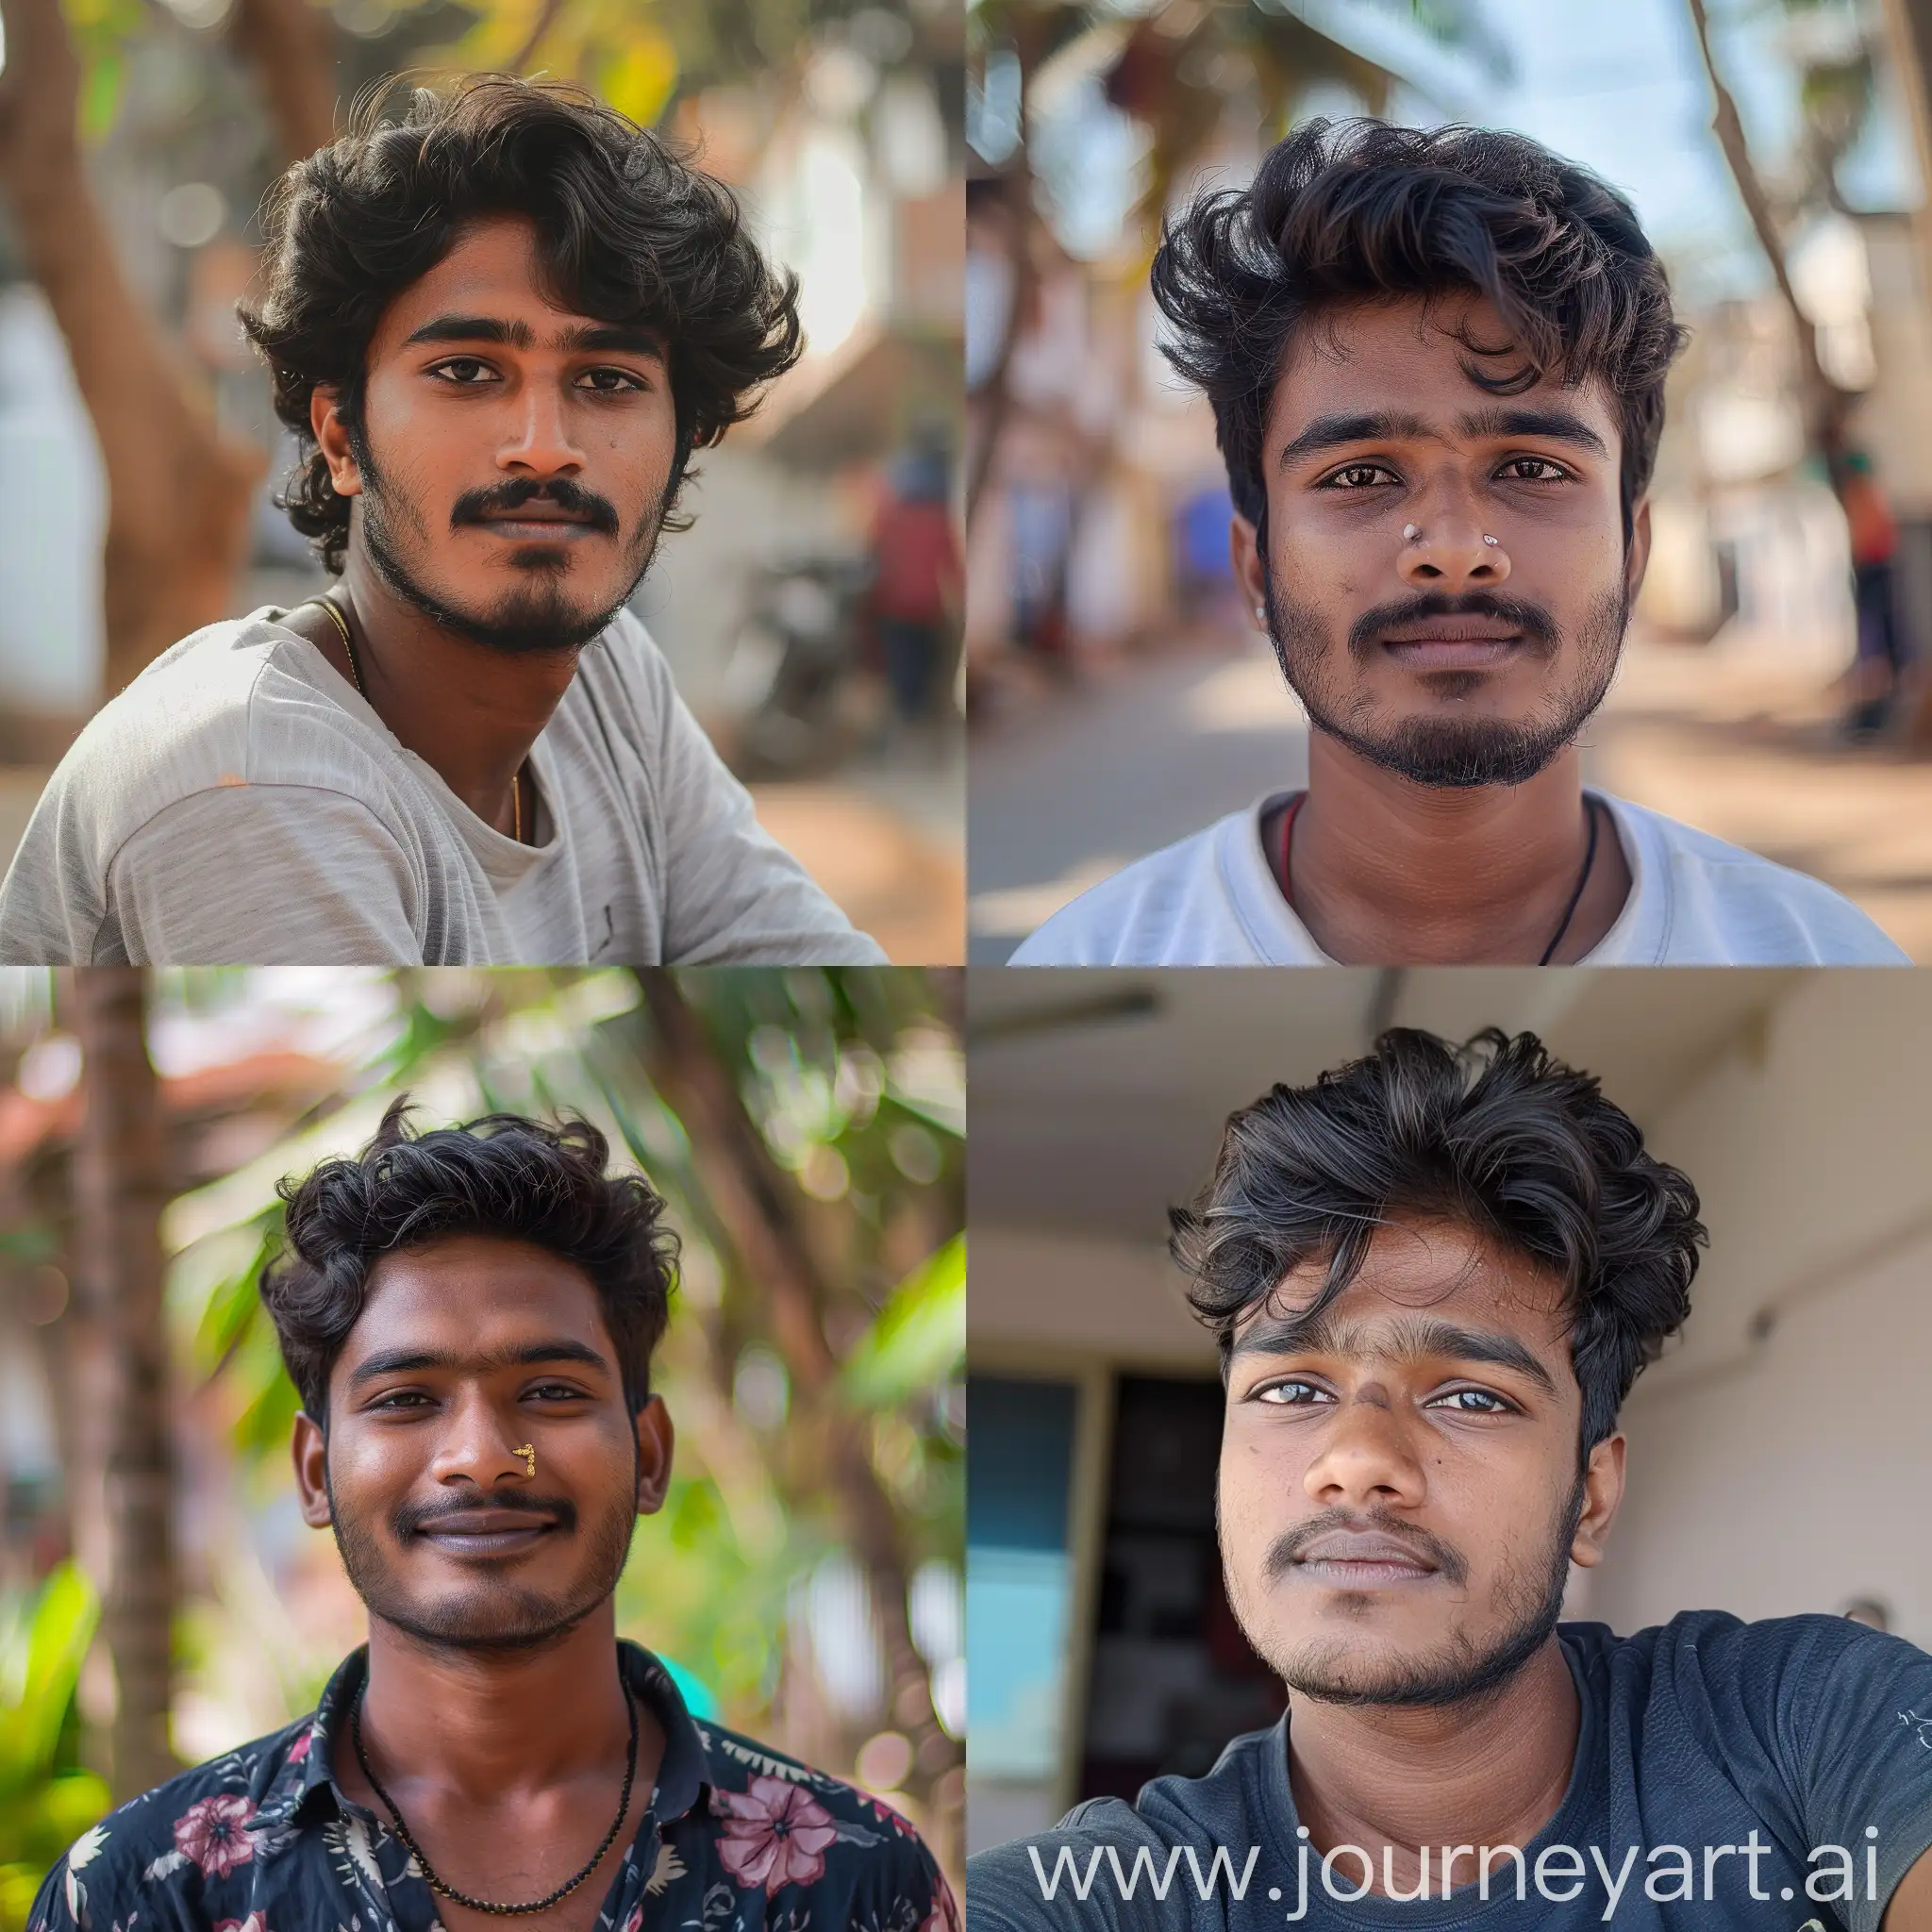 A young 25 year old guy from Mangalore, Karnataka, India